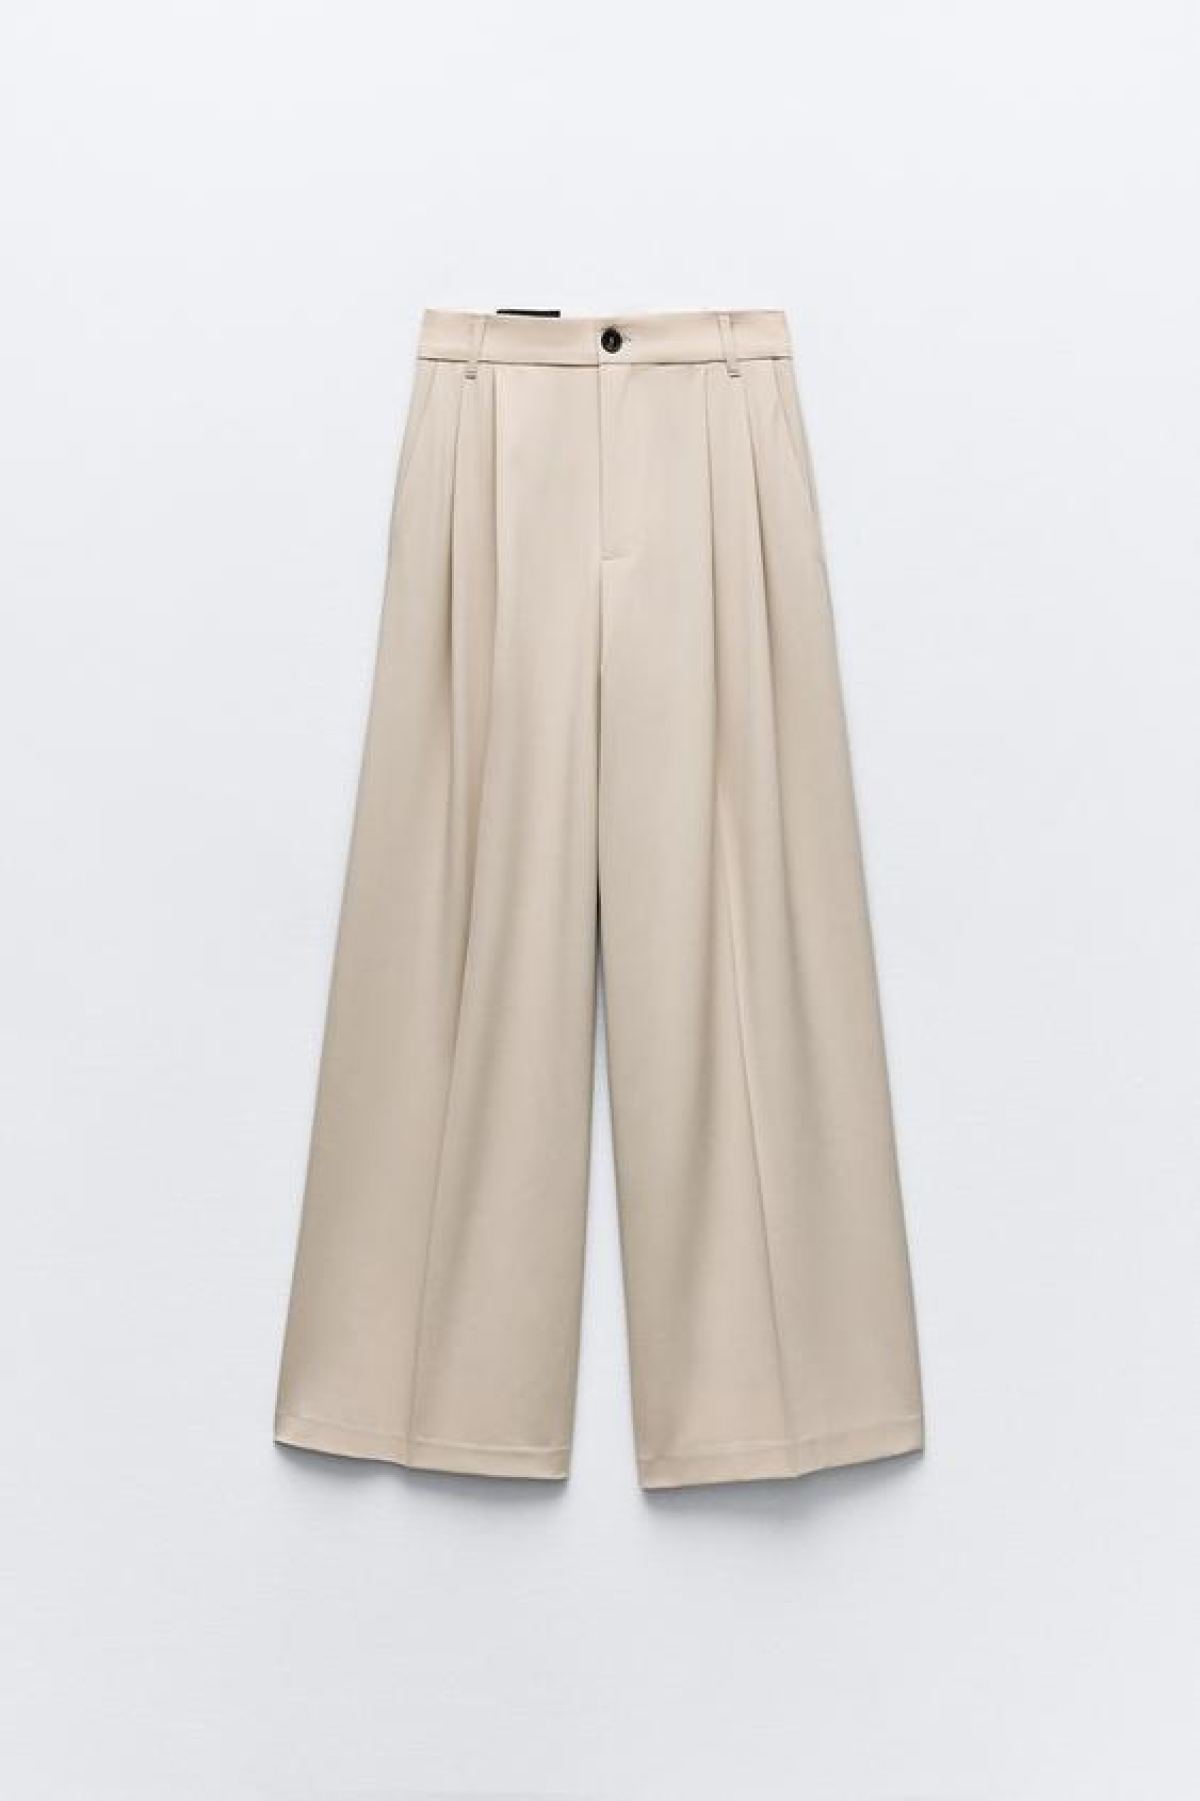 Zara plisirane hlače - 29,95 eur 